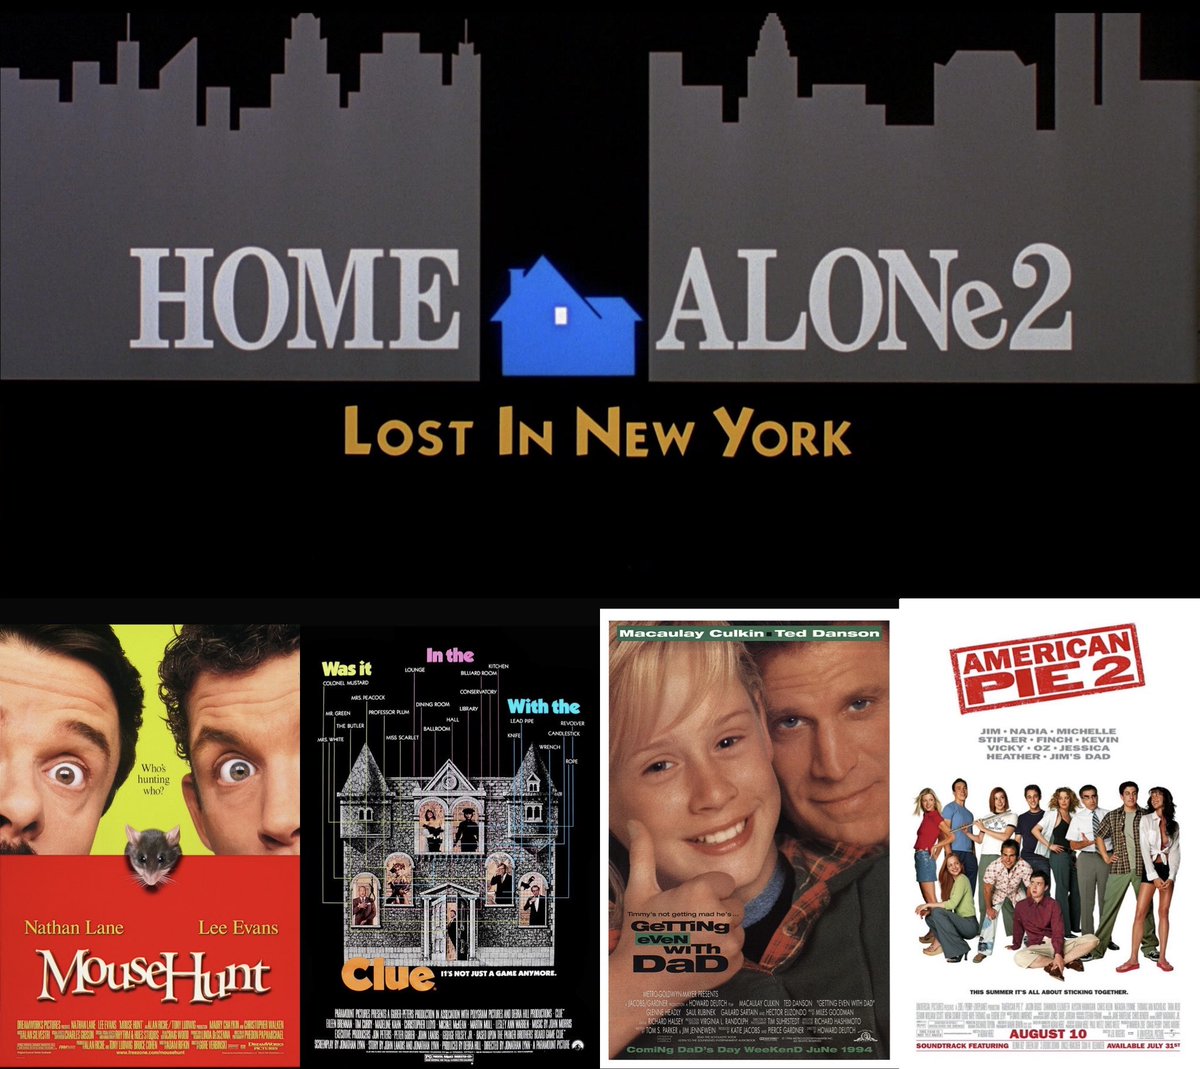 Find our Home Alone 2: Lost in New York (1992) chat 🚕 LINK IN BIO 🎧

#ChatflixRecommends these flicks also… 

#MouseHunt #GoreVerbinski #NathanLane #Clue @mrjonathanlynn #TimCurry #GettingEvenwithDad #HowardDeutch @IncredibleCulk #AmericanPie2 #JamesBRogers @JasonBiggs